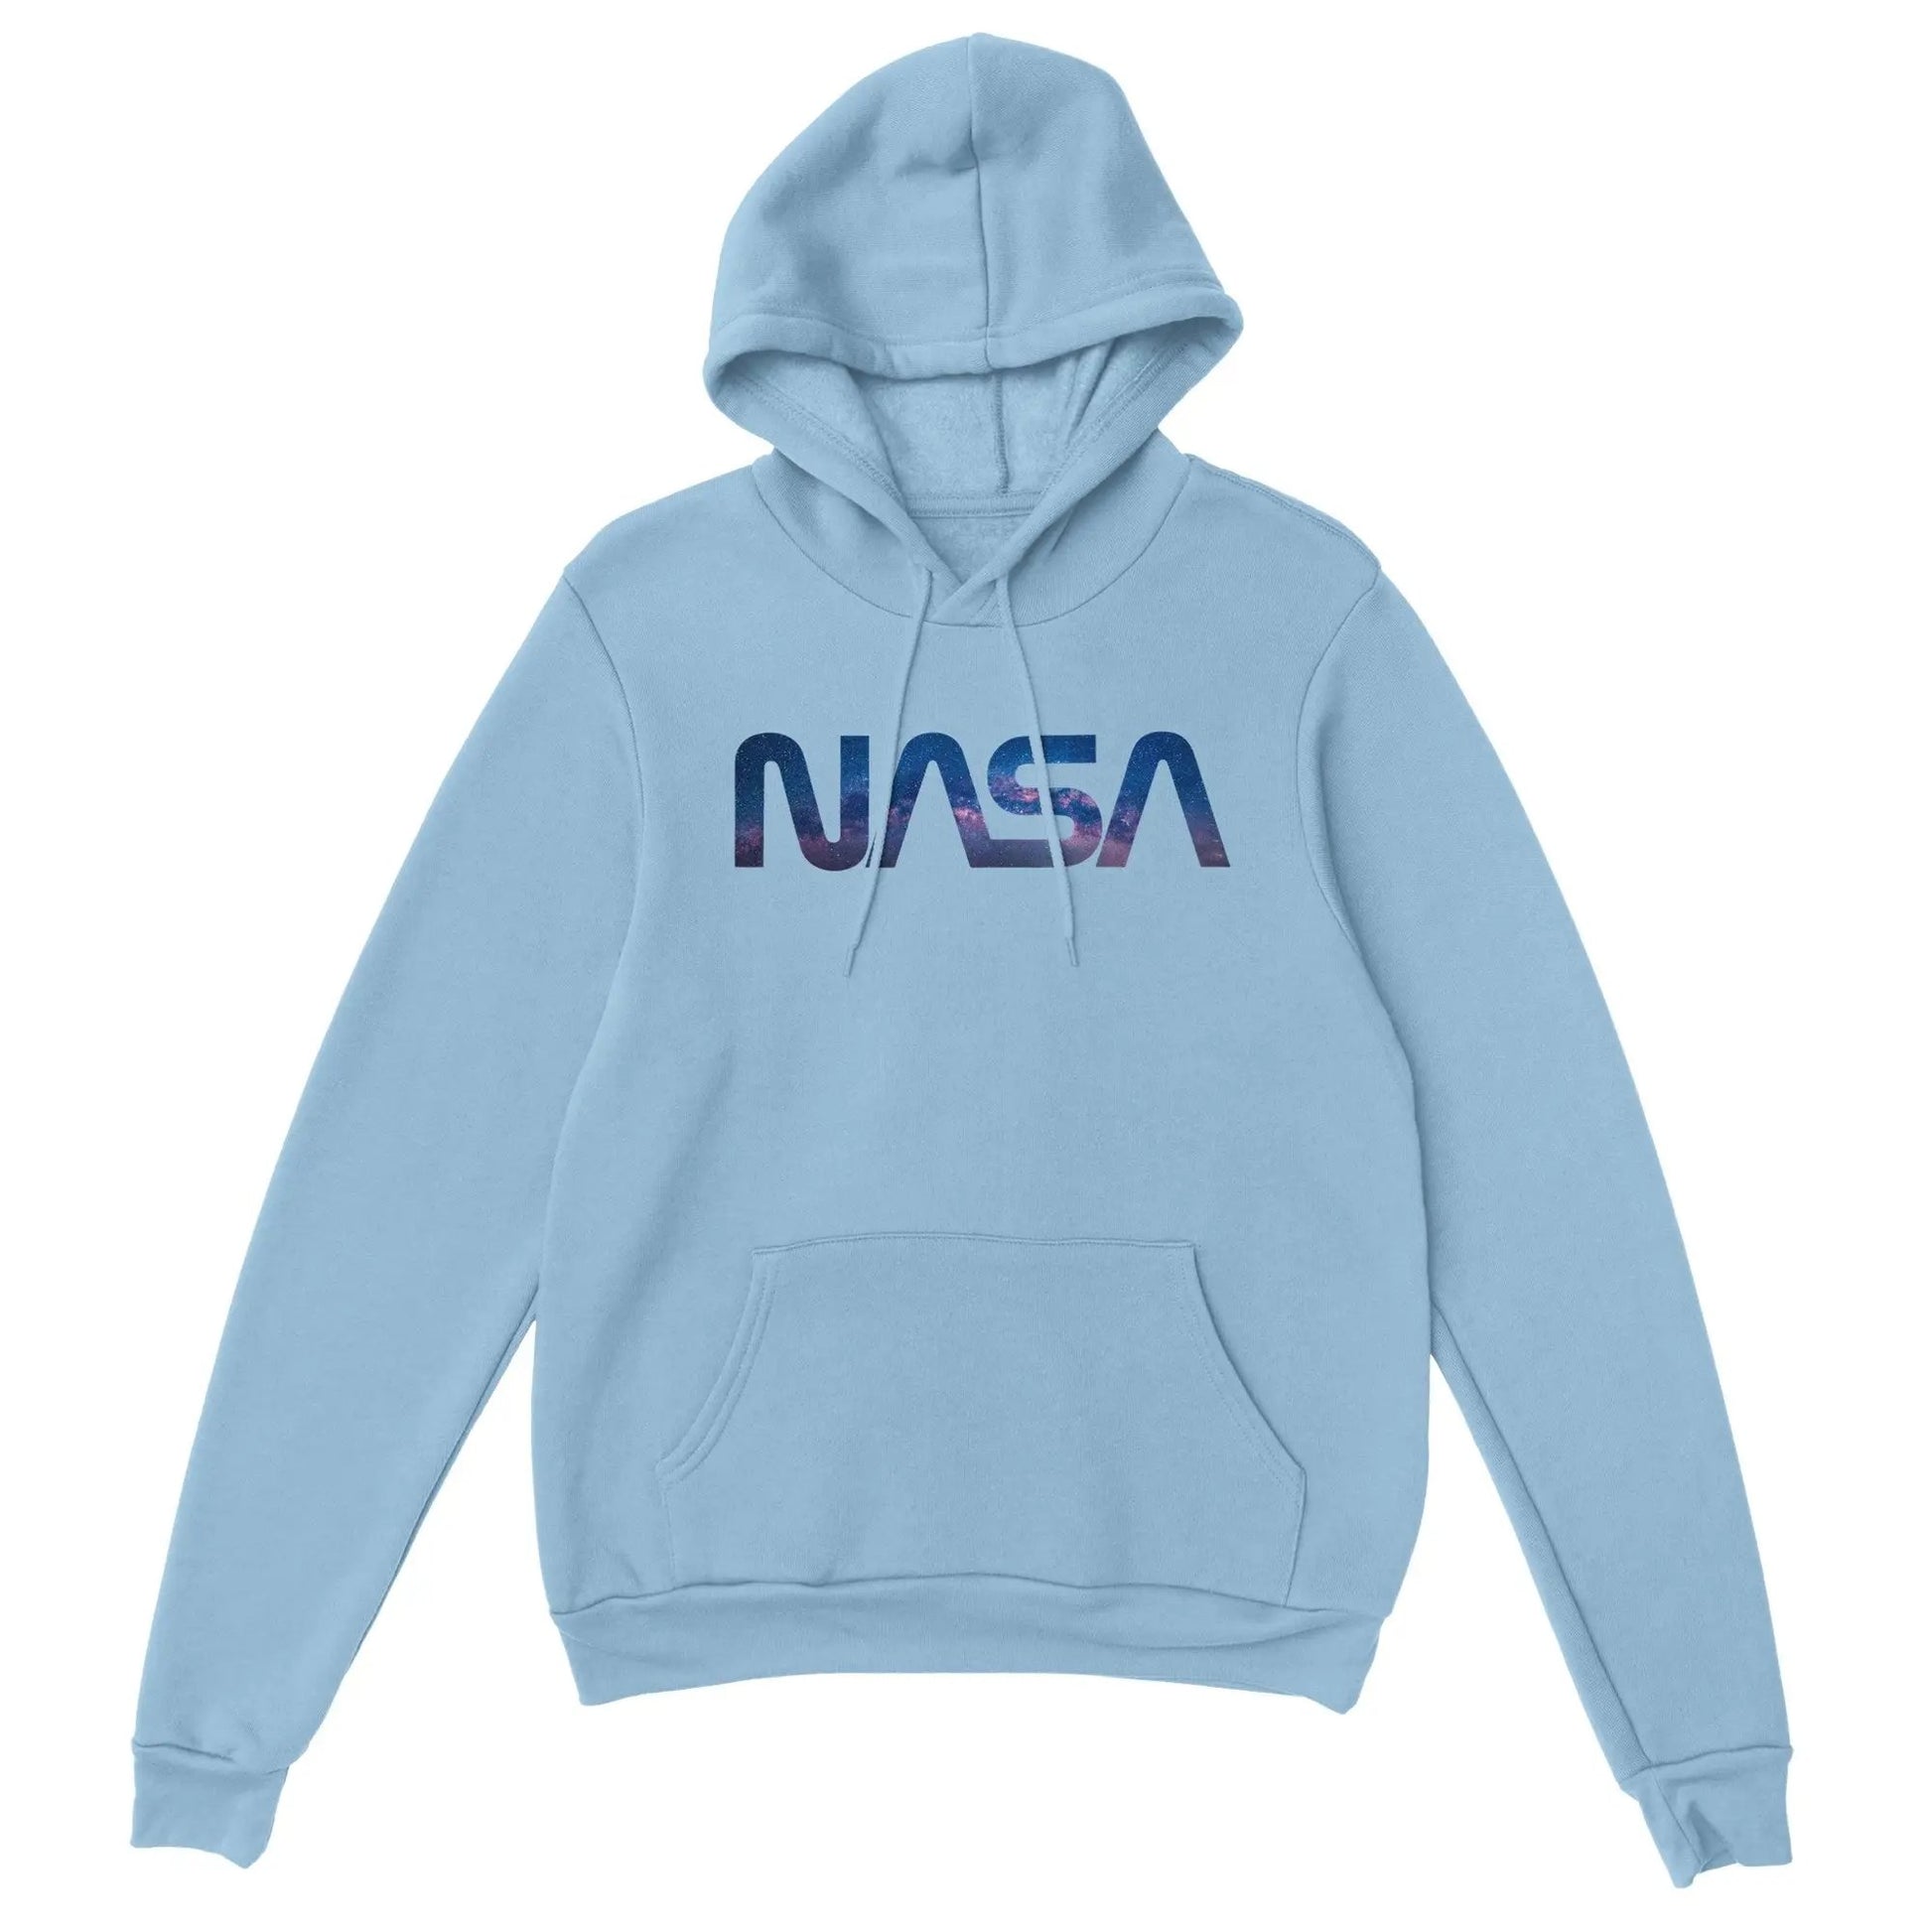 a blue nasa sweatshirt with the word nasa printed on it